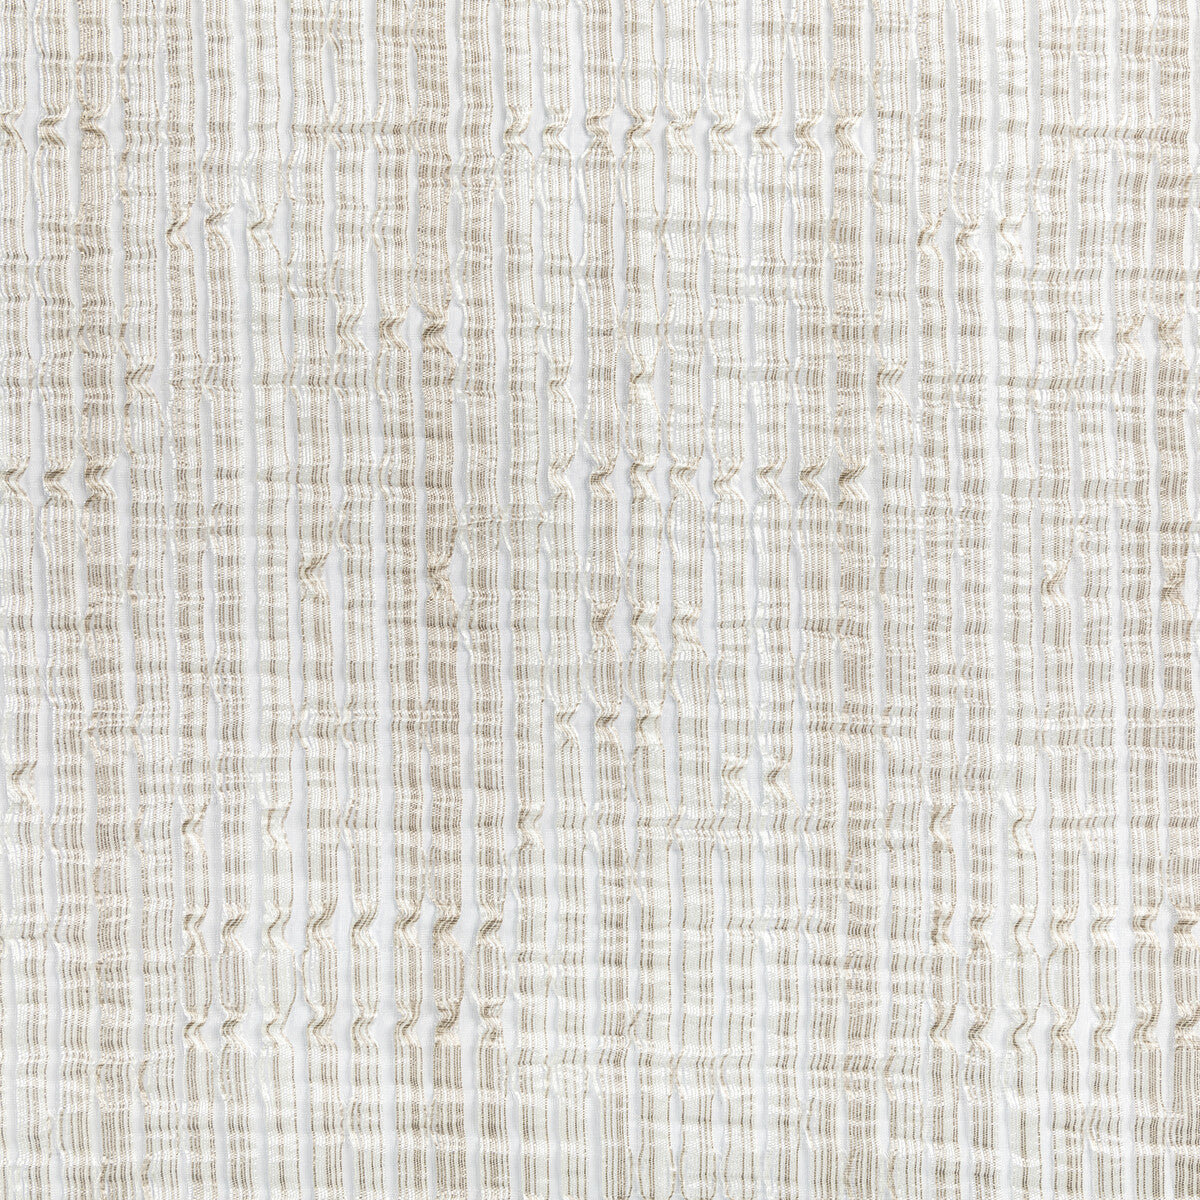 Kravet Basics fabric in 4497-16 color - pattern 4497.16.0 - by Kravet Basics in the Sheer Outlook collection